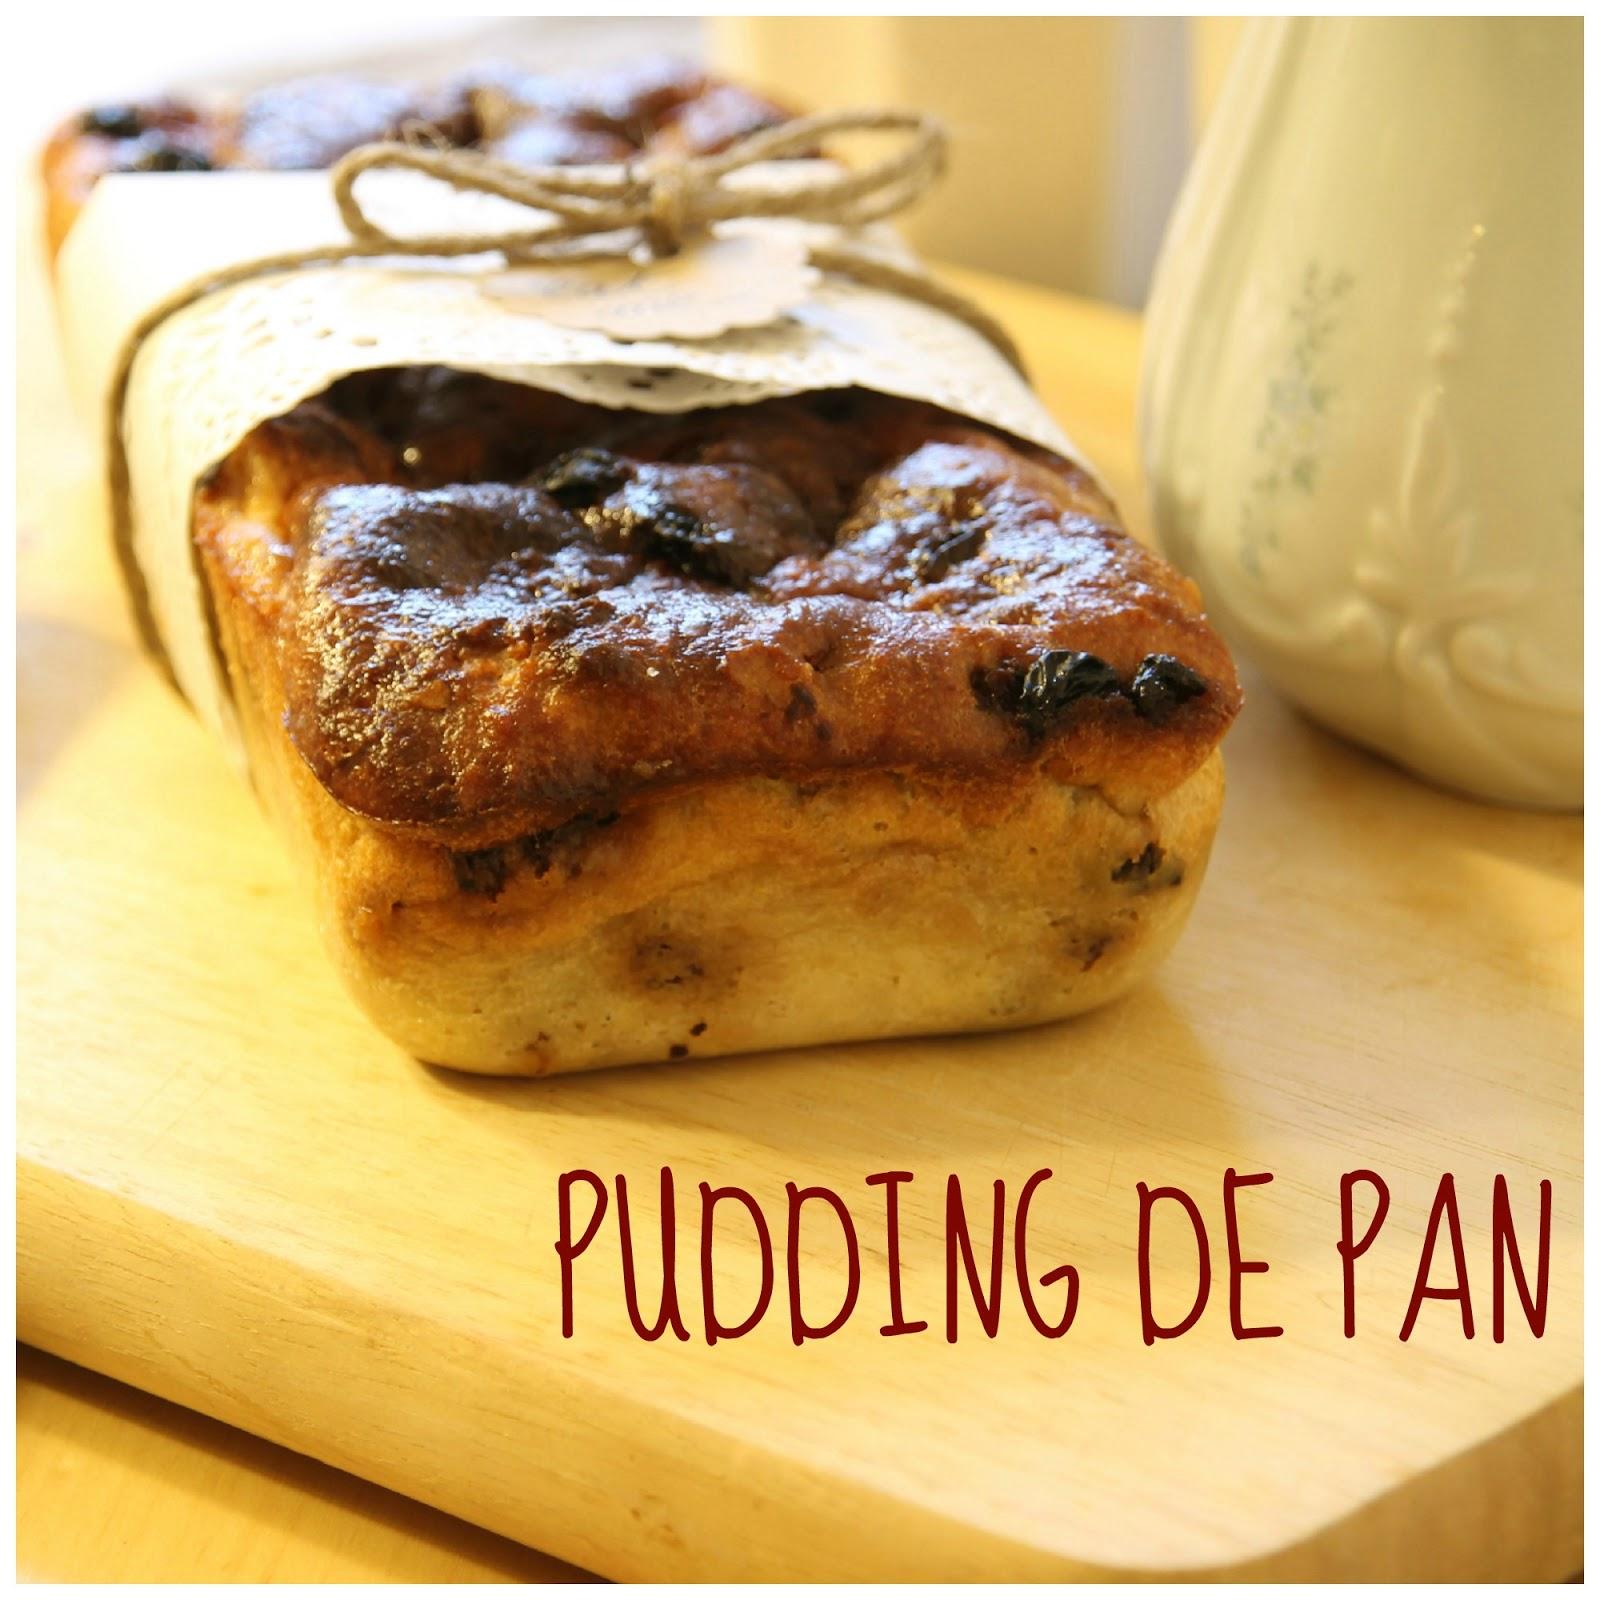 pudding de pan - bread pudding